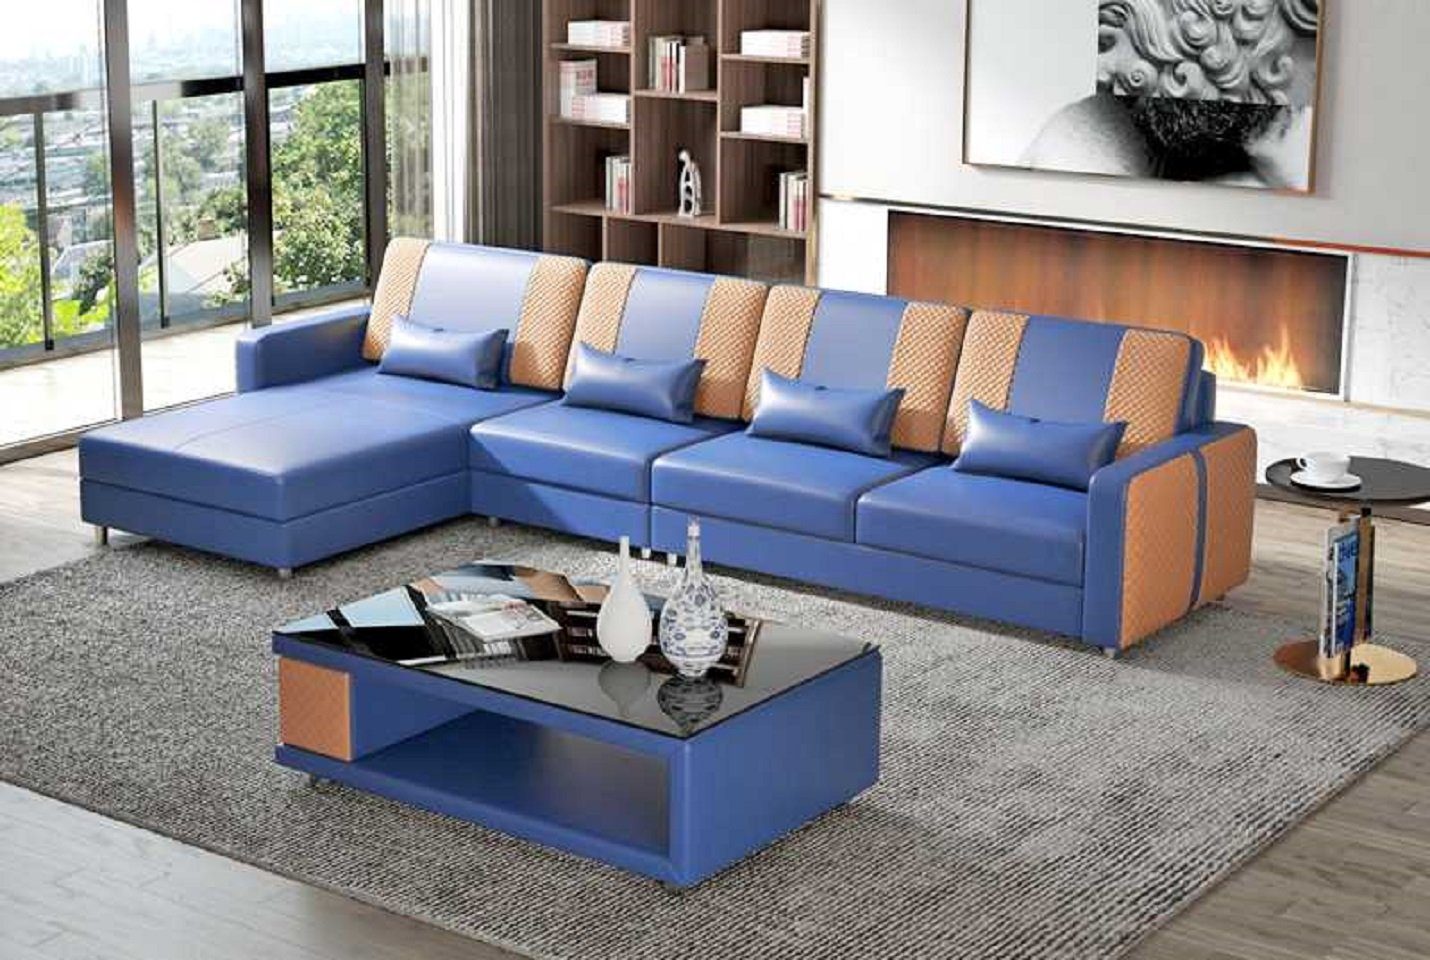 Sofa Form Europe Liege Teile, JVmoebel Eckgarnitur Ecksofa Neu, Ecksofa Modern Blau in Luxus 3 Couch L Made